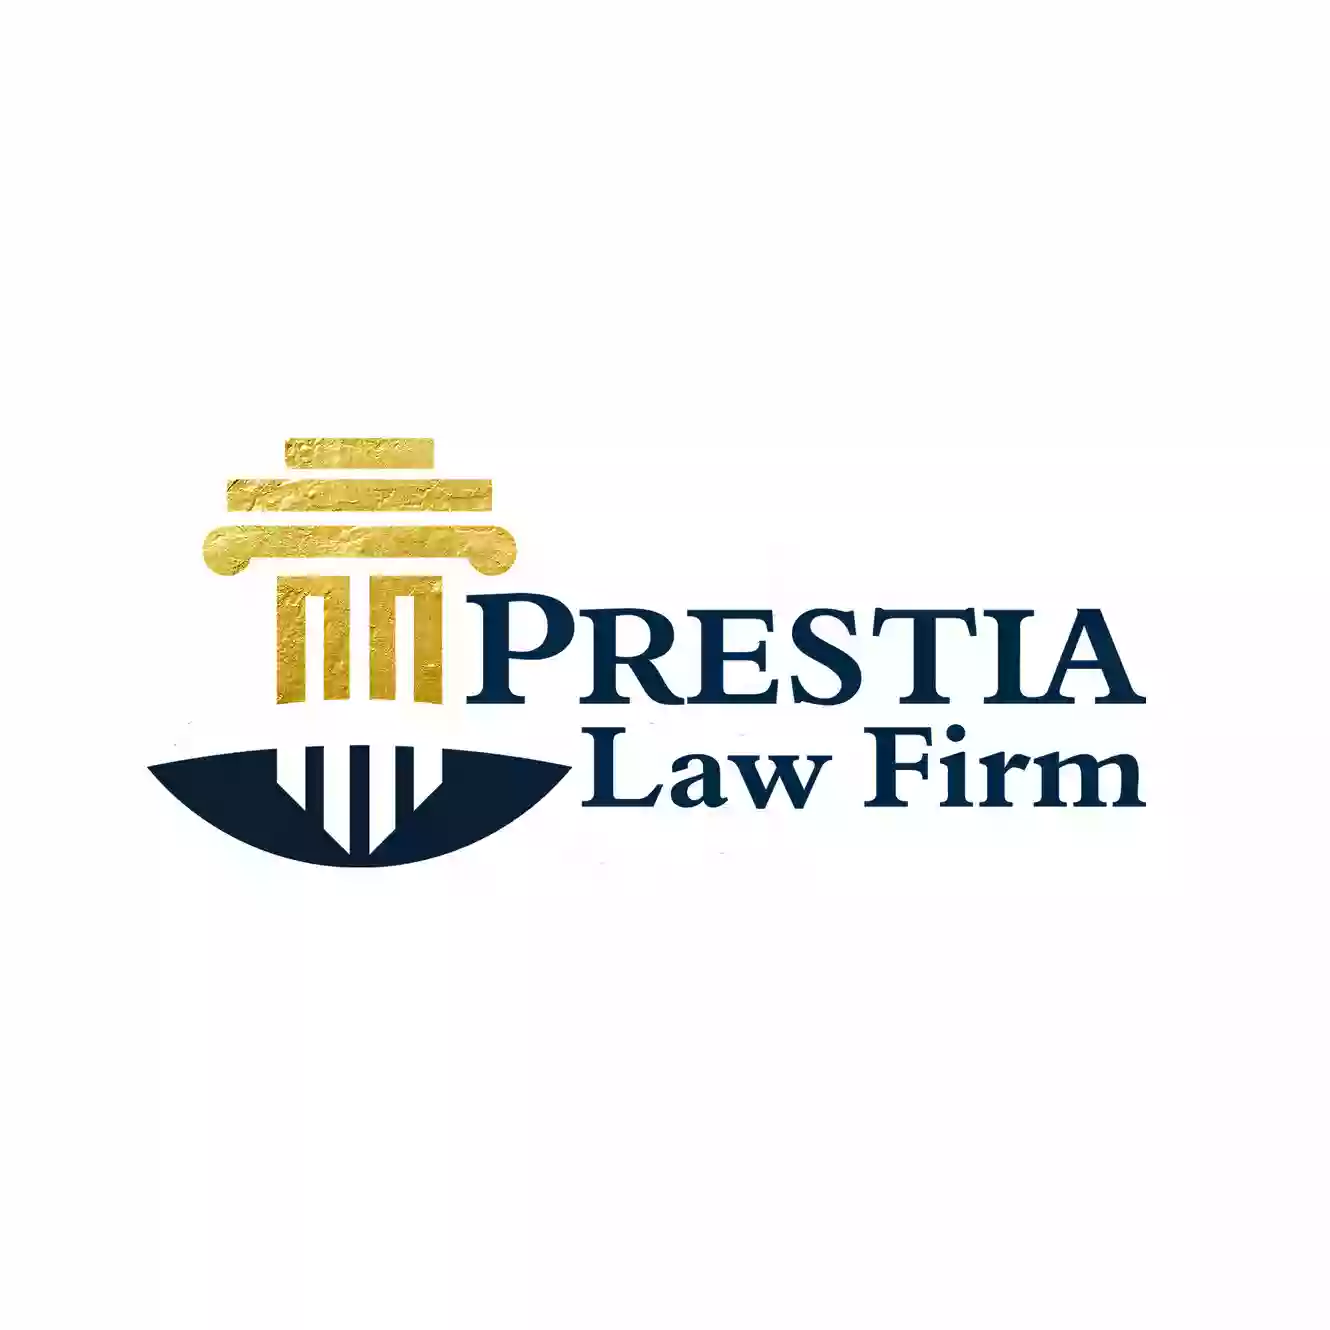 The Prestia Law Firm